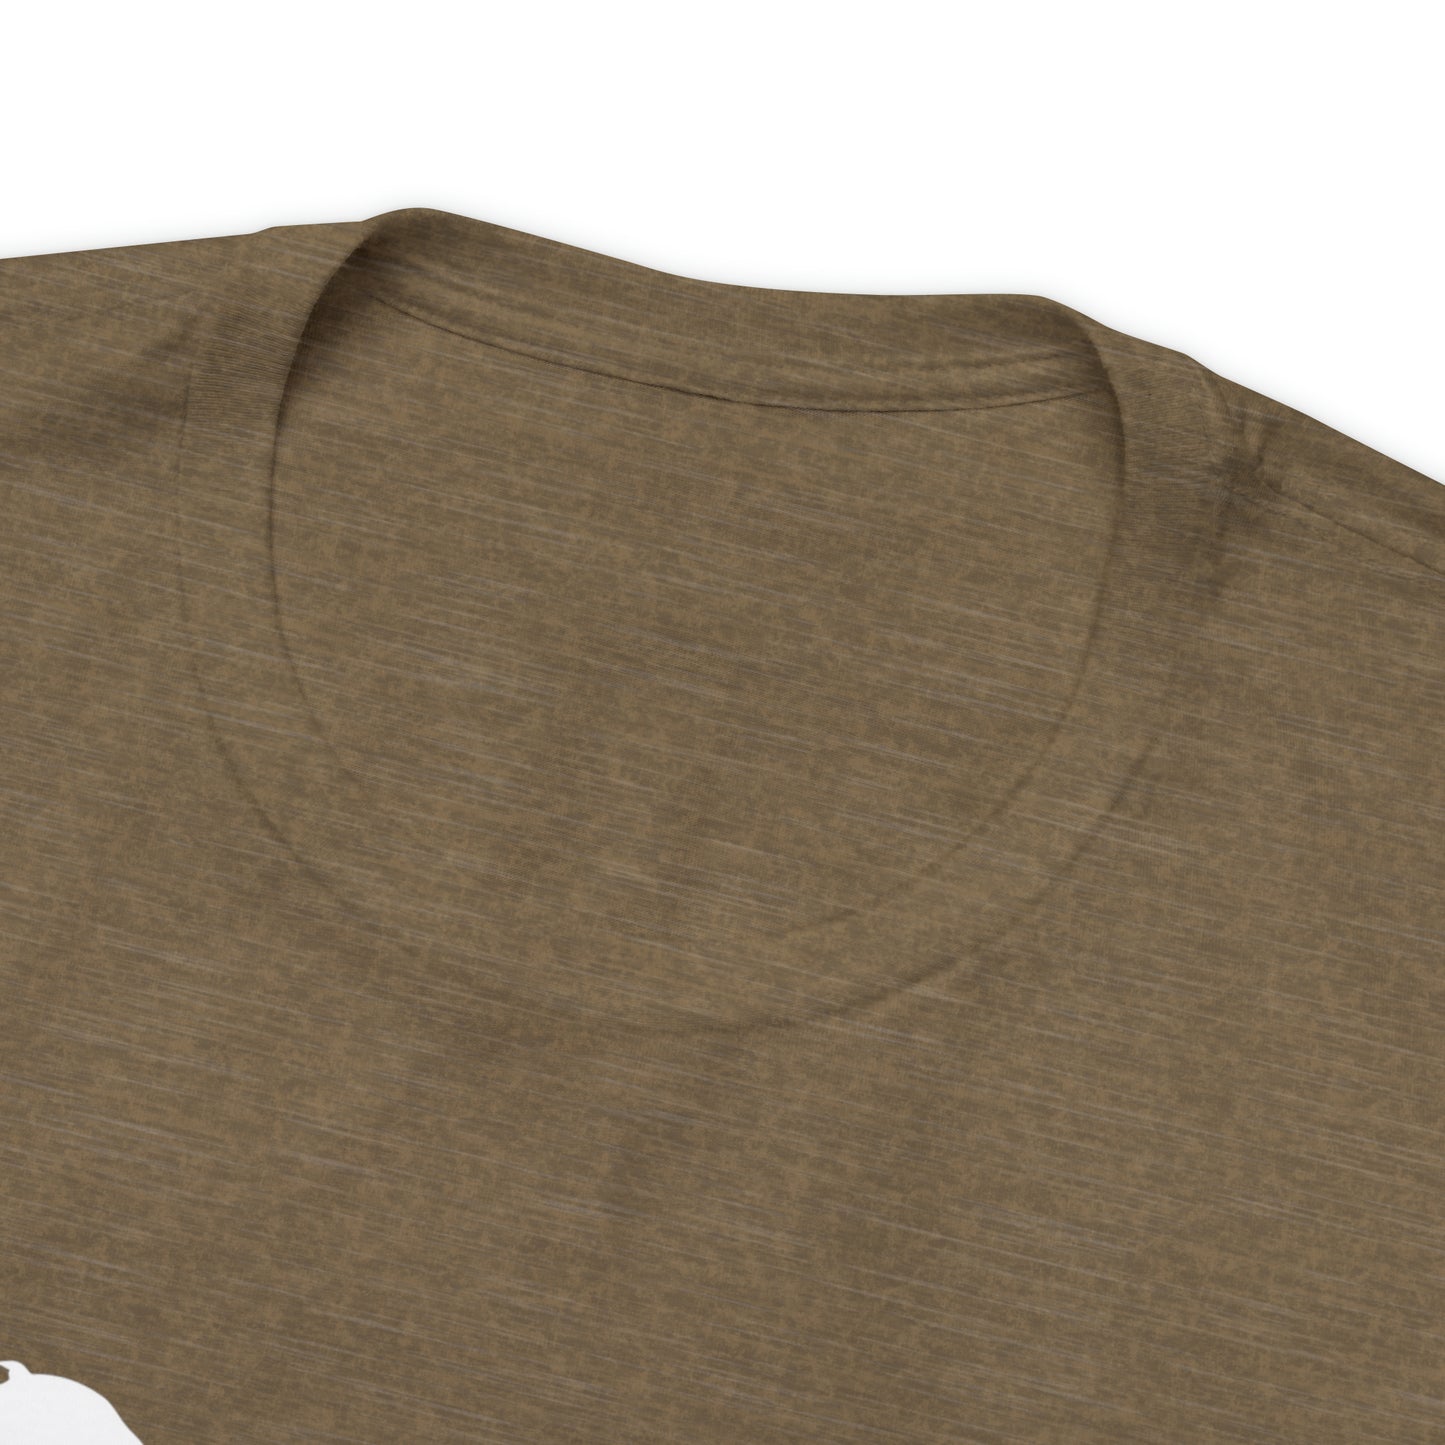 Yoga Theme T-Shirt | Yoga Lover Gift Idea T-Shirt Petrova Designs